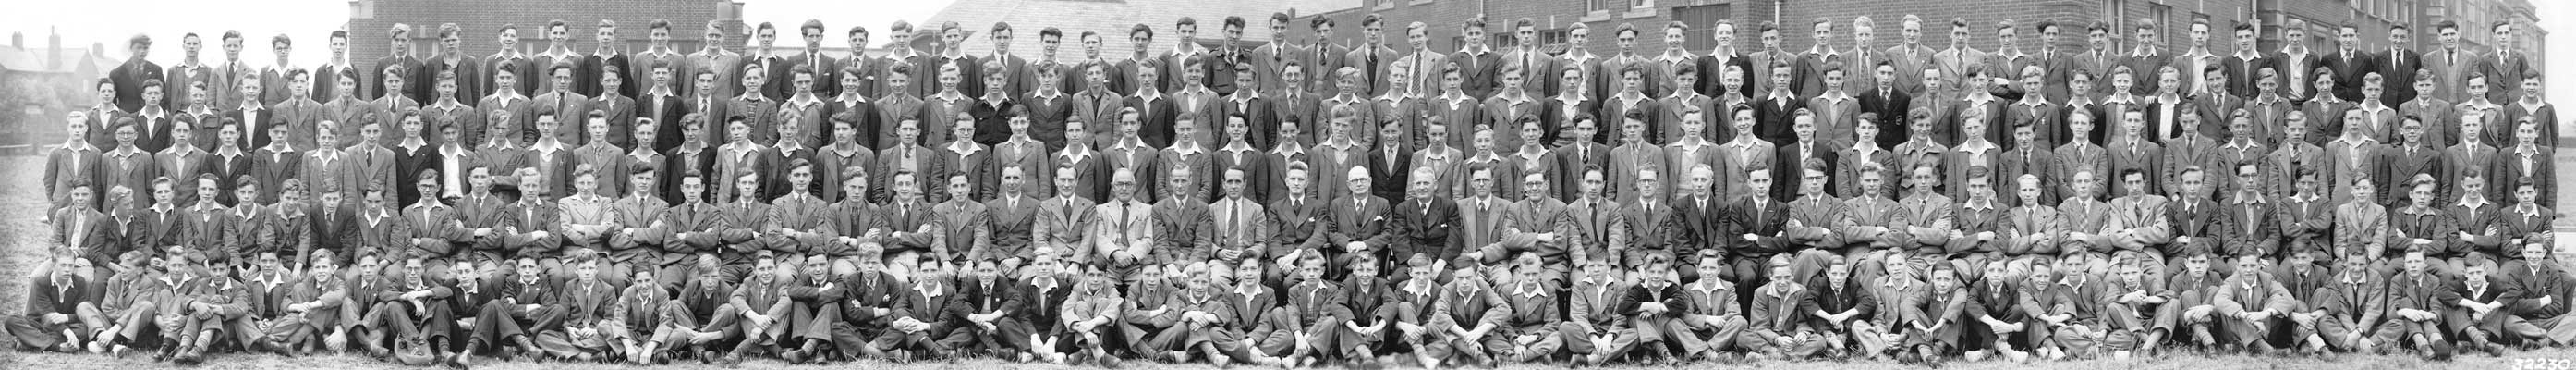 1948/9 - Seniors